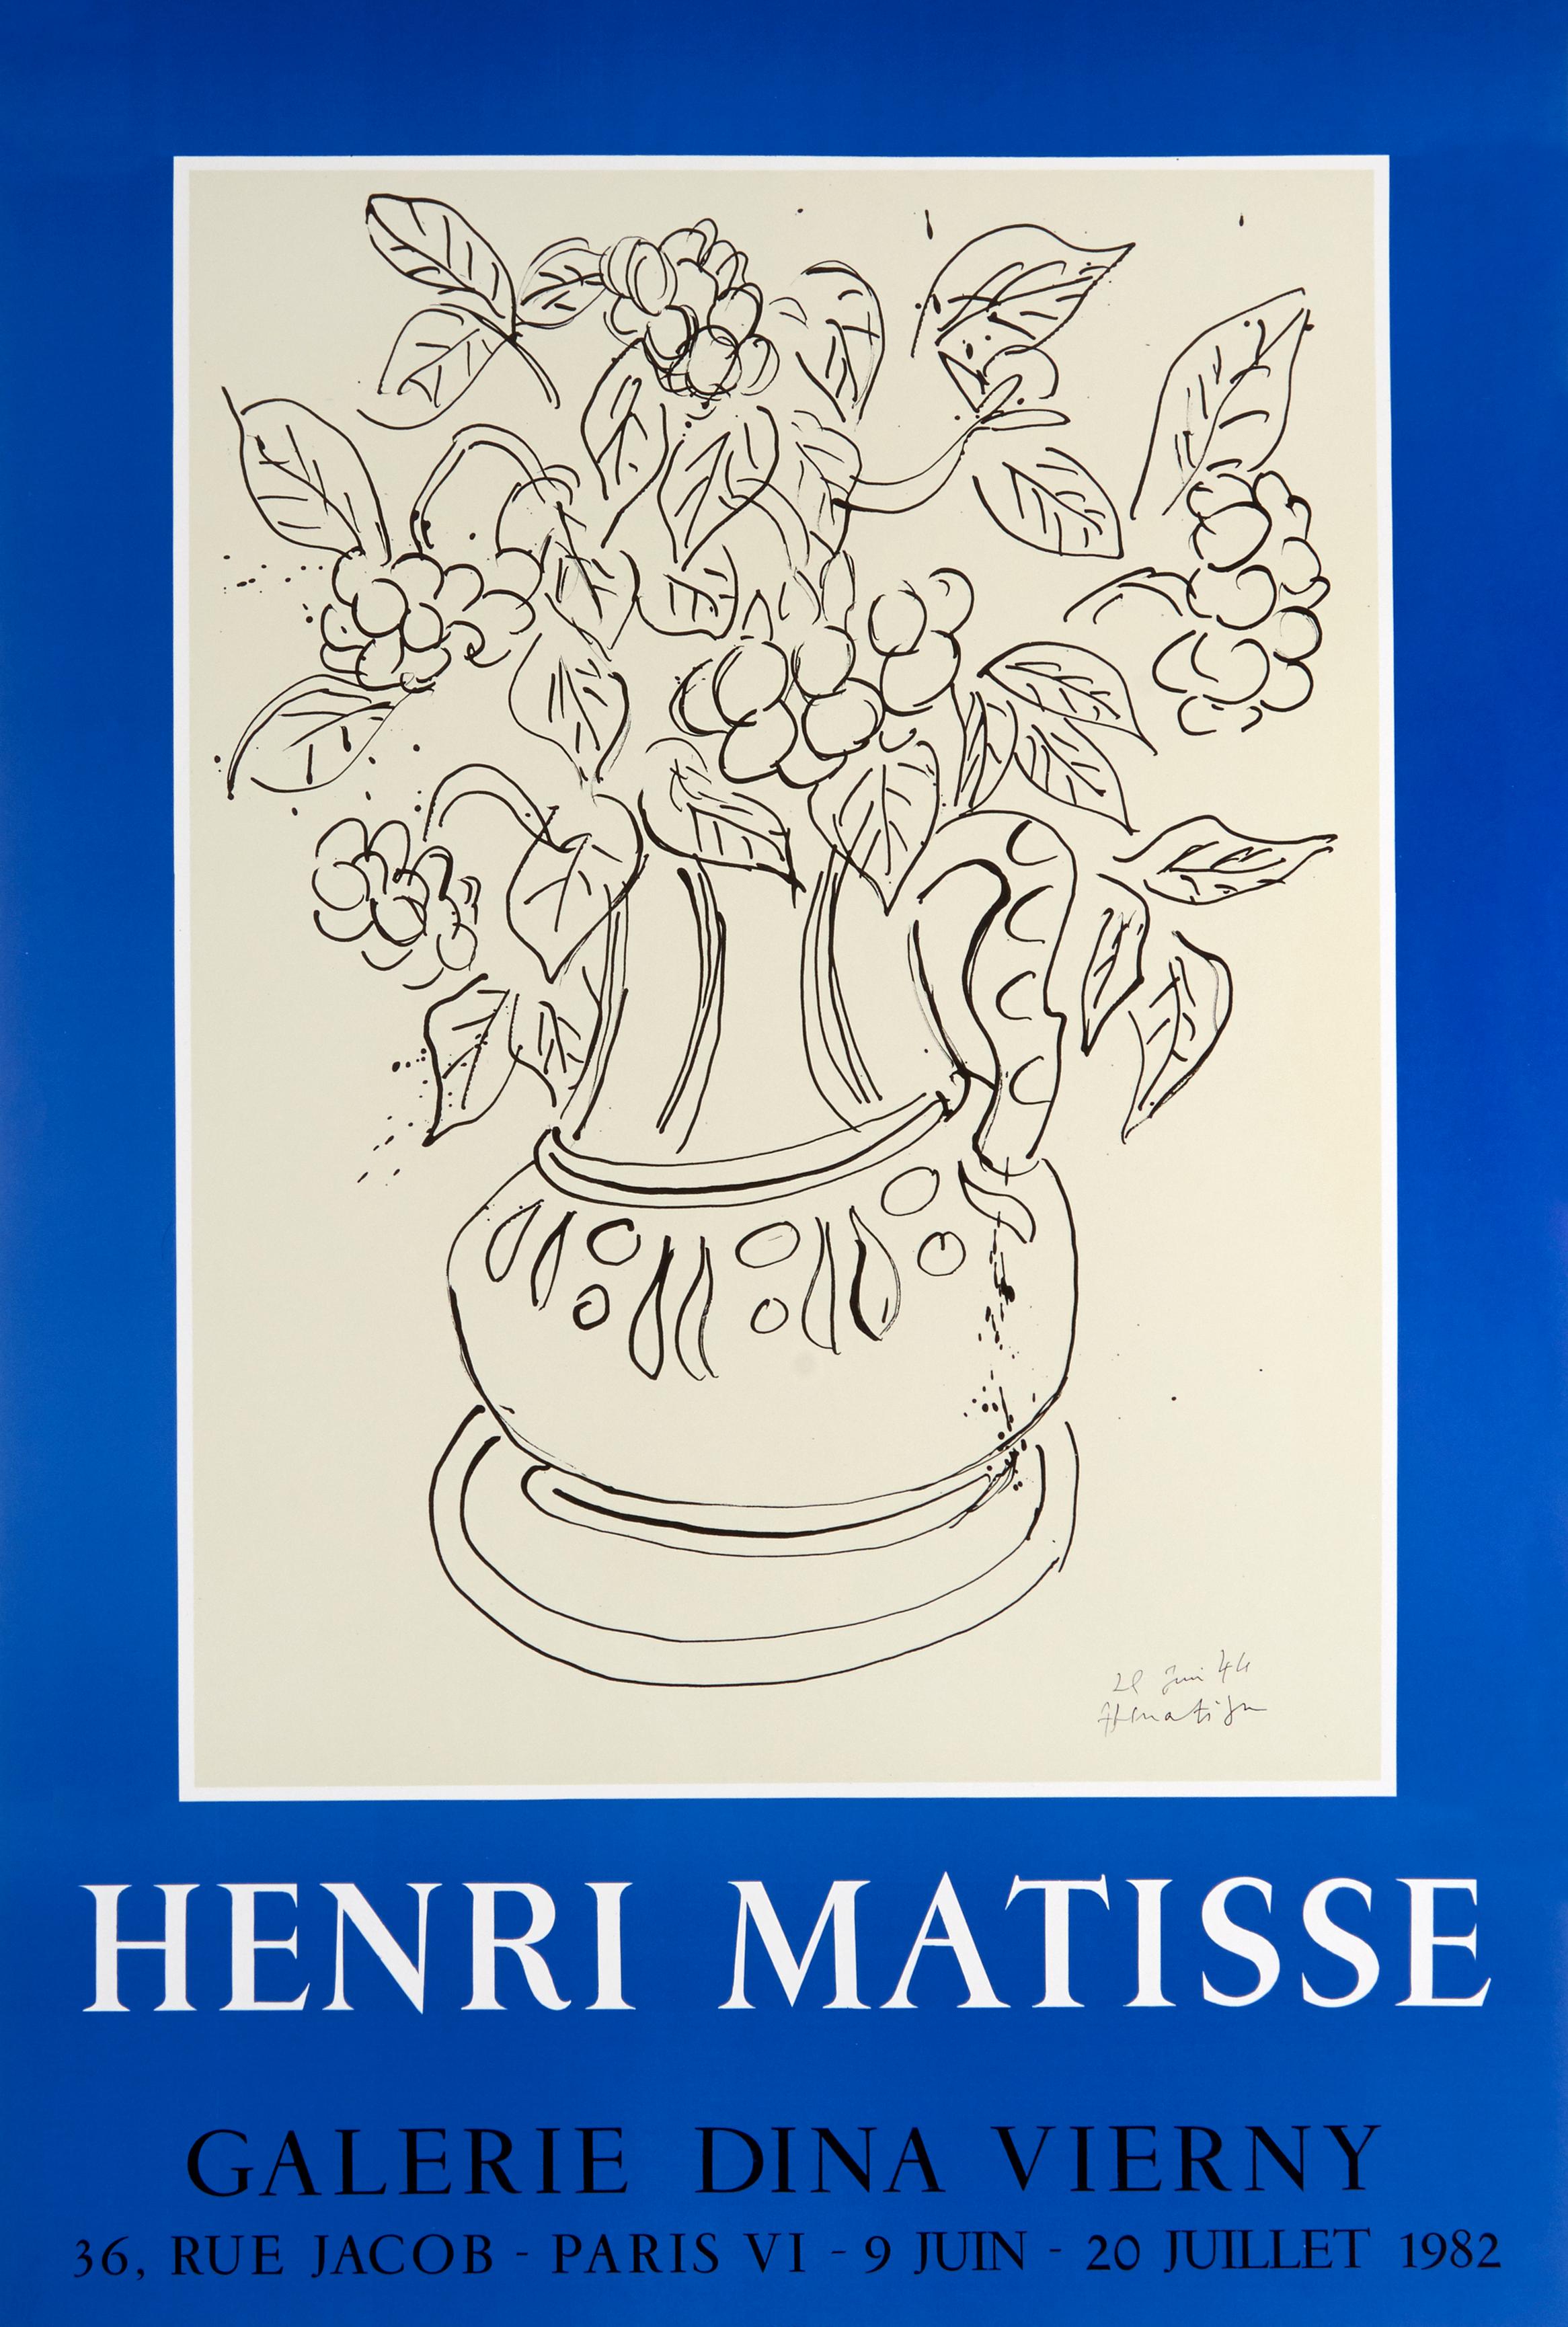 (after) Henri Matisse Print - Galerie Dina Vierny after Henri Matisse, 1982